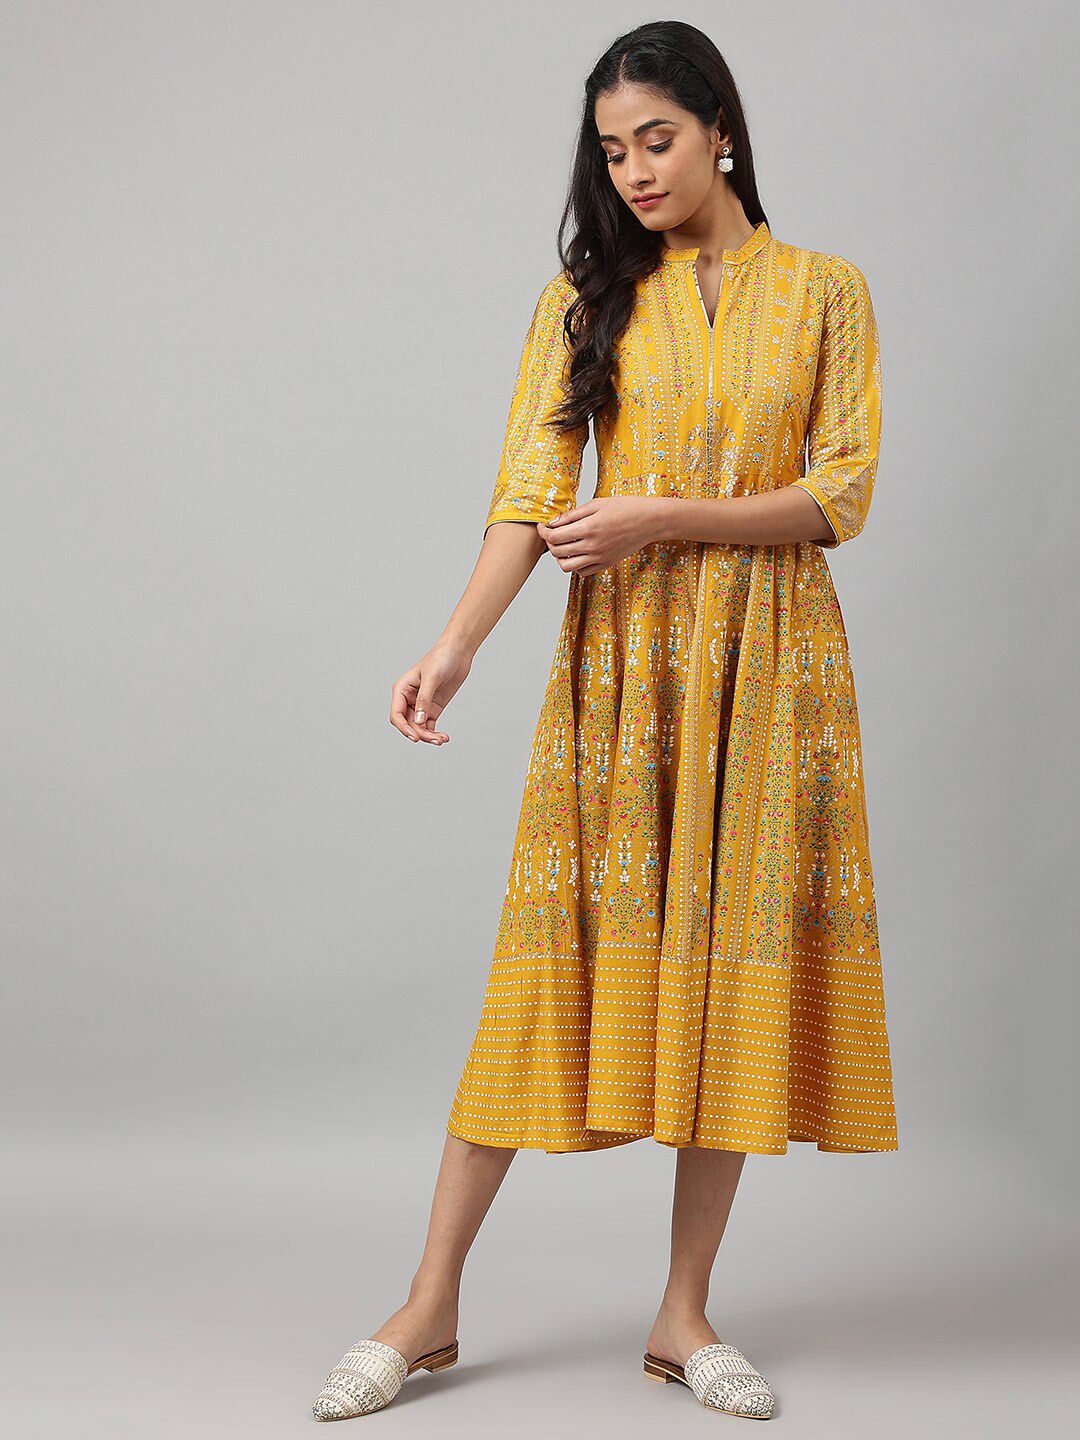 W Yellow Ethnic Motifs Chiffon Ethnic A-Line Midi Dress Price in India